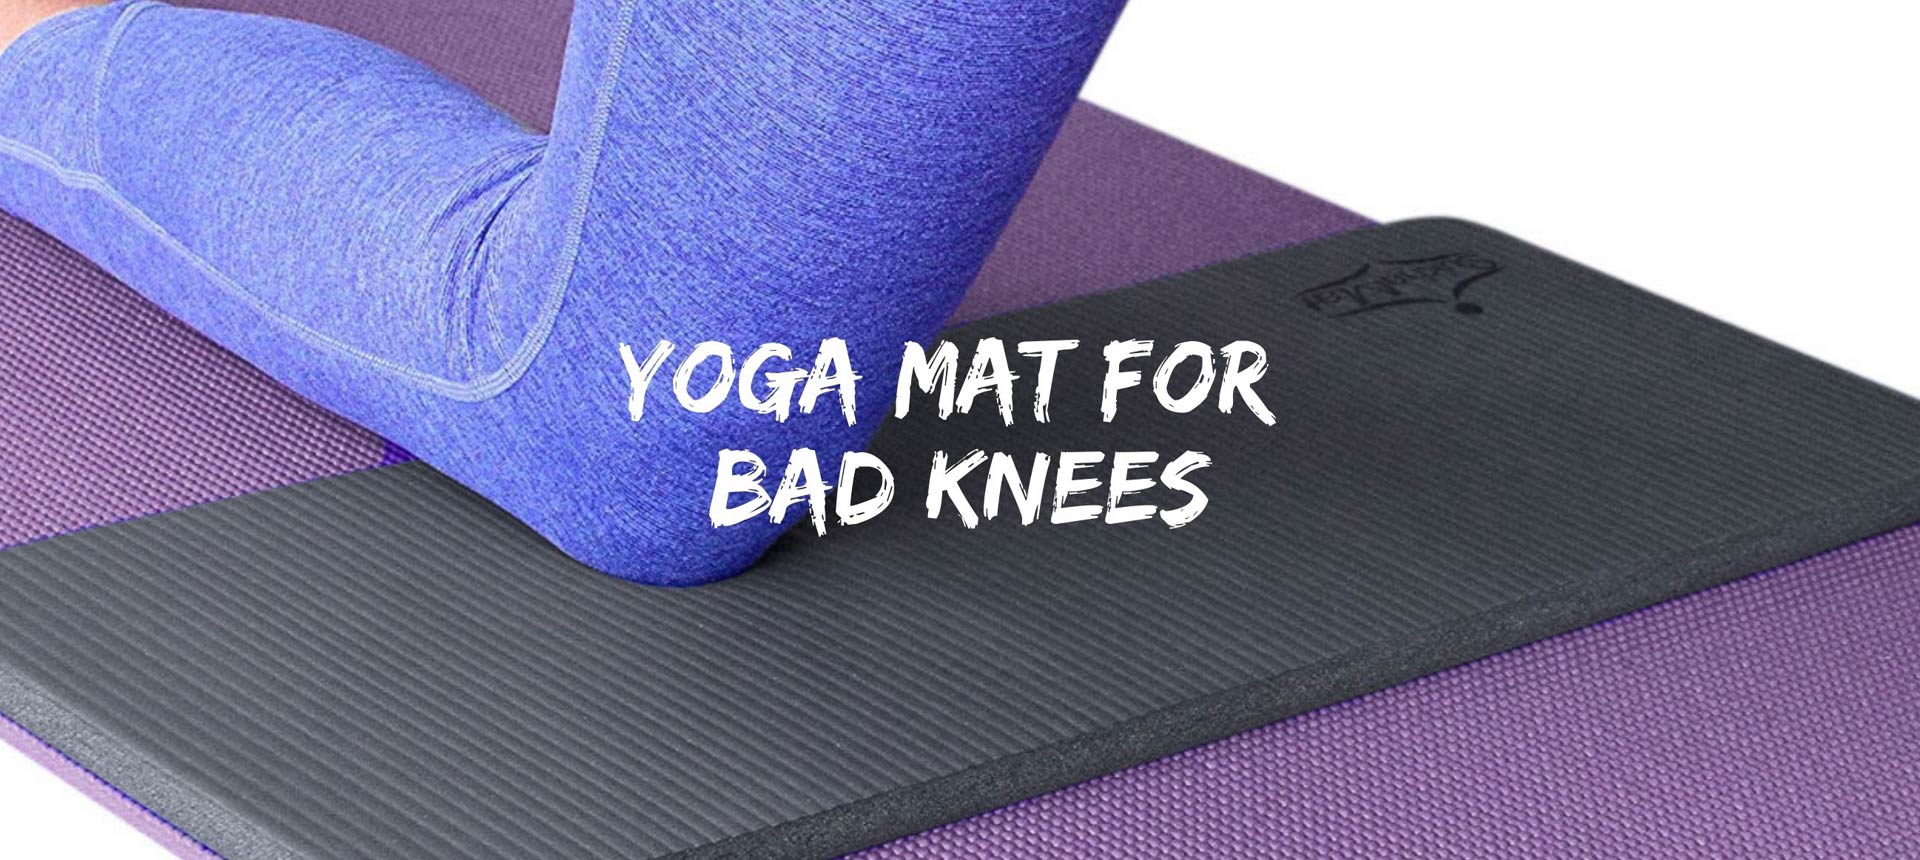 Yoga Mat For Bad Knees